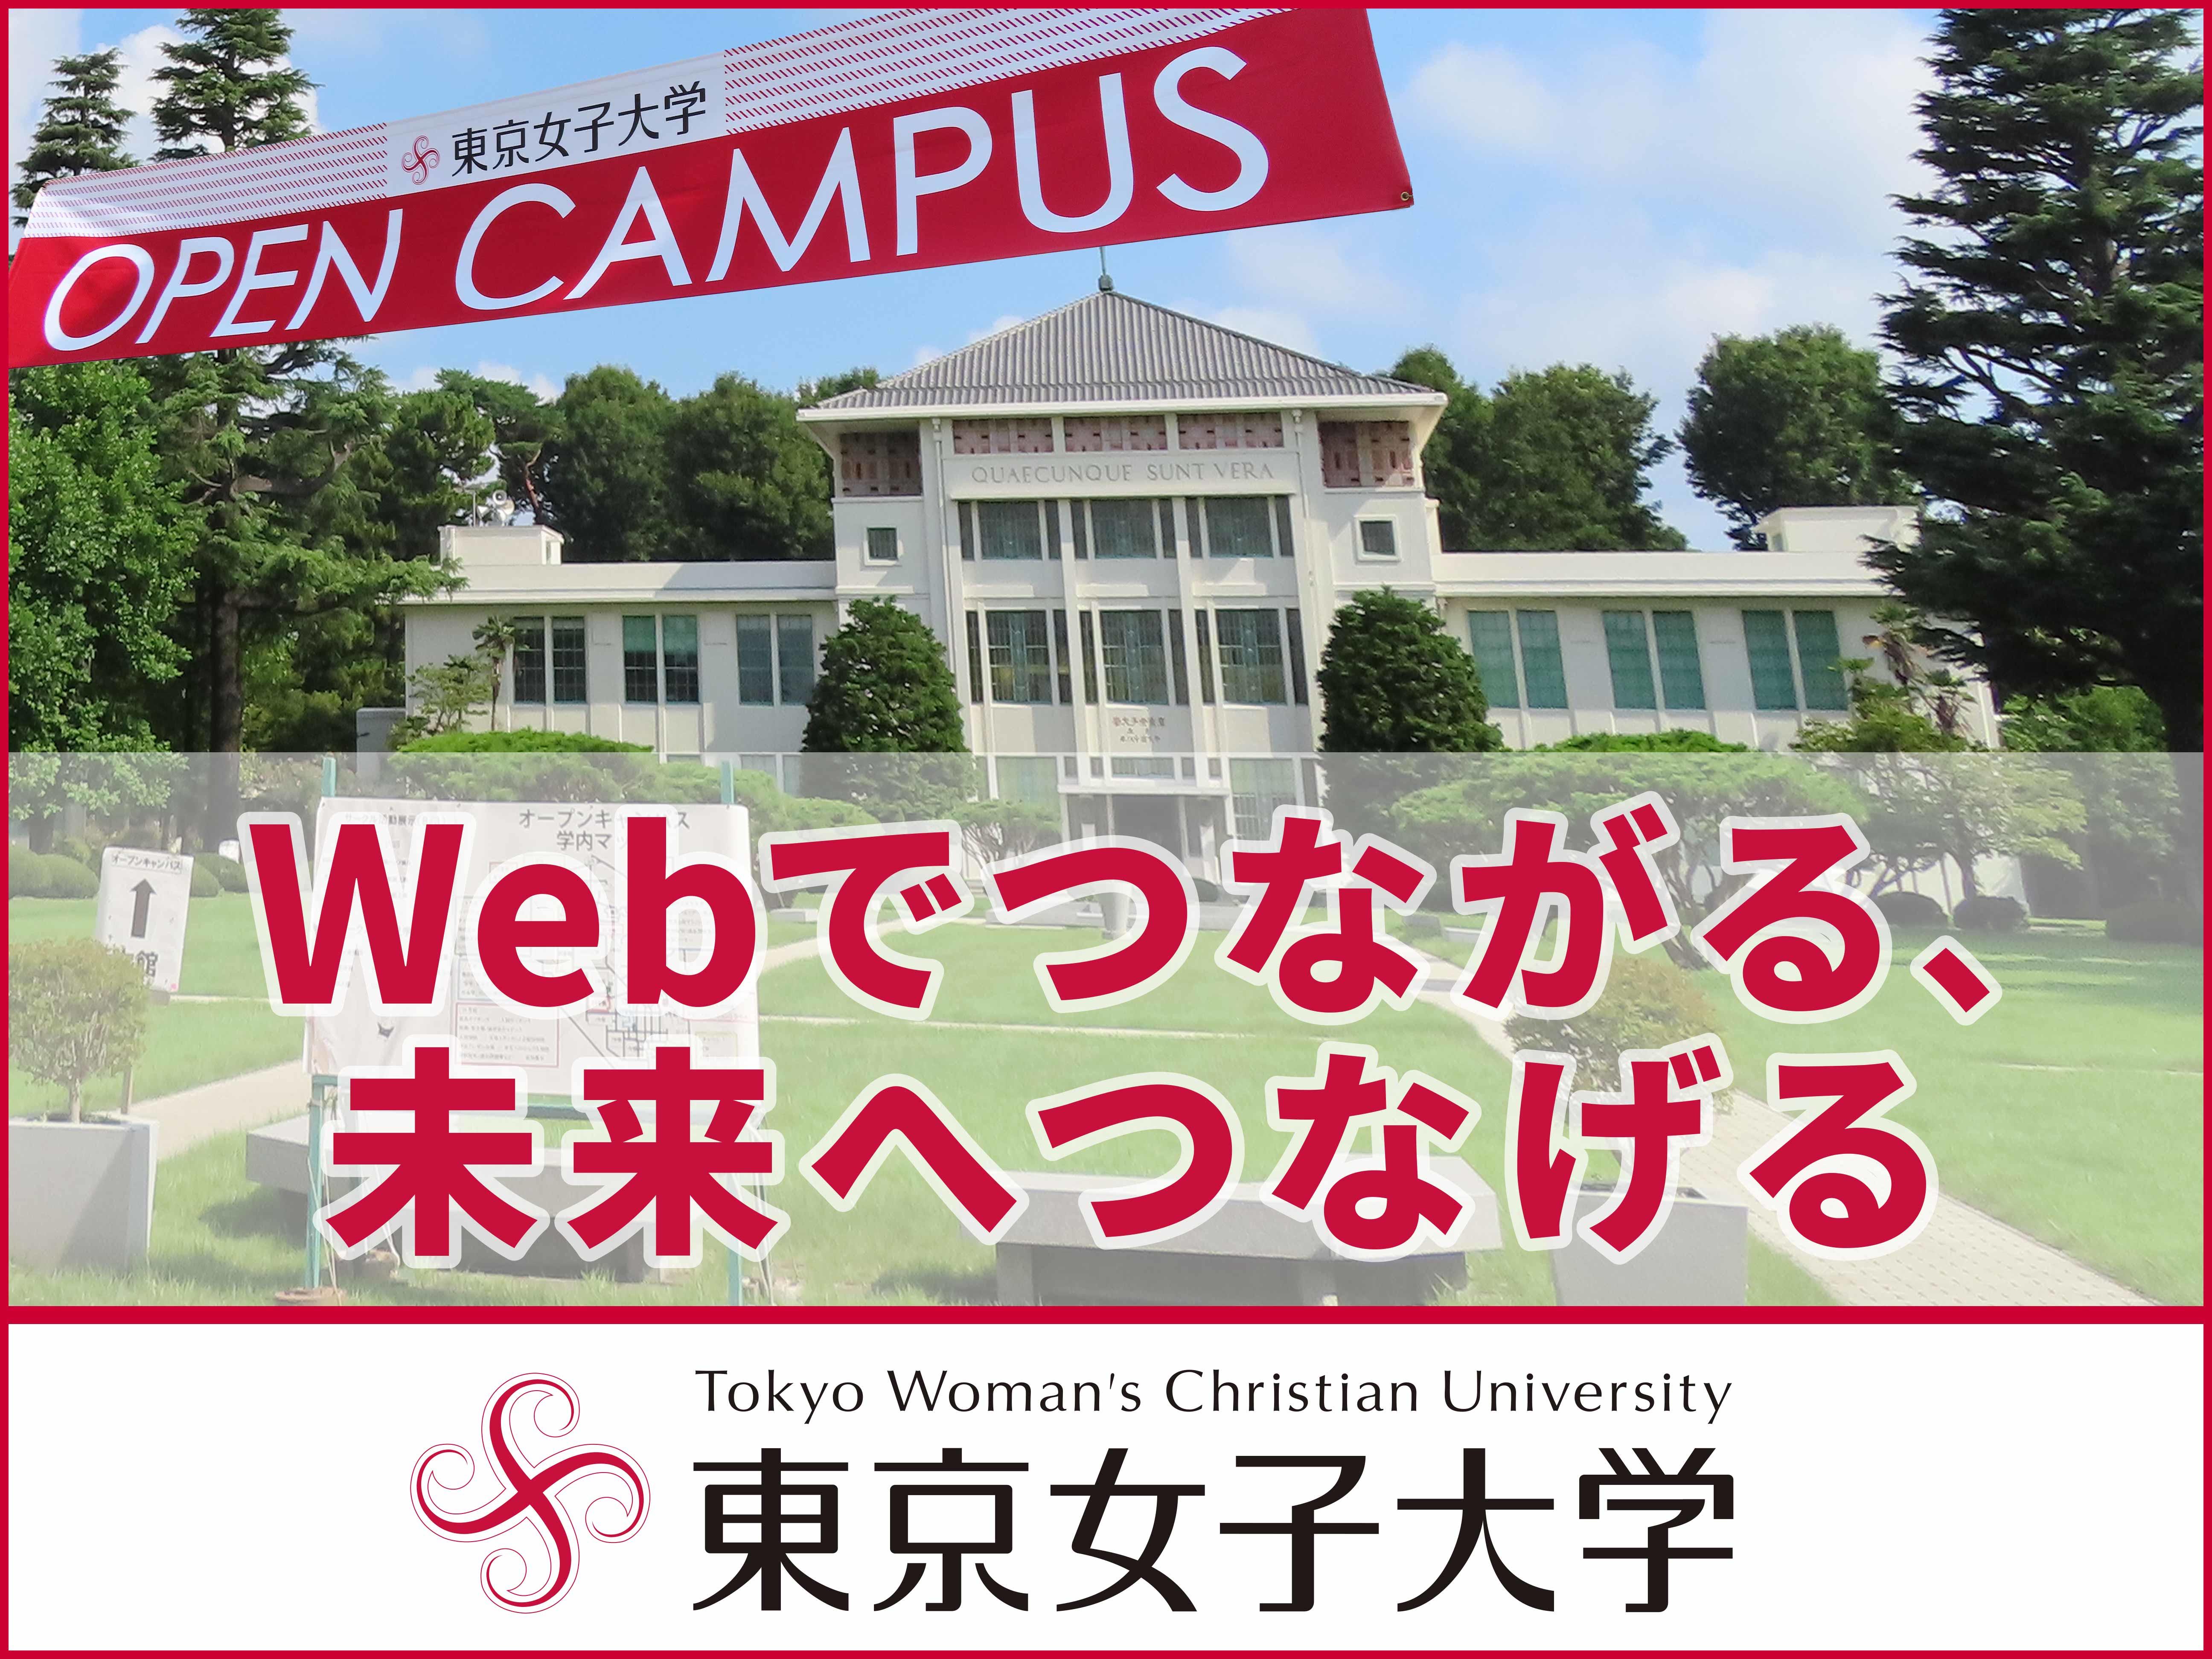 「Webでつながる、未来へつなげる -- 東京女子大学」：東京女子大学がWebオープンキャンパスの開催を発表